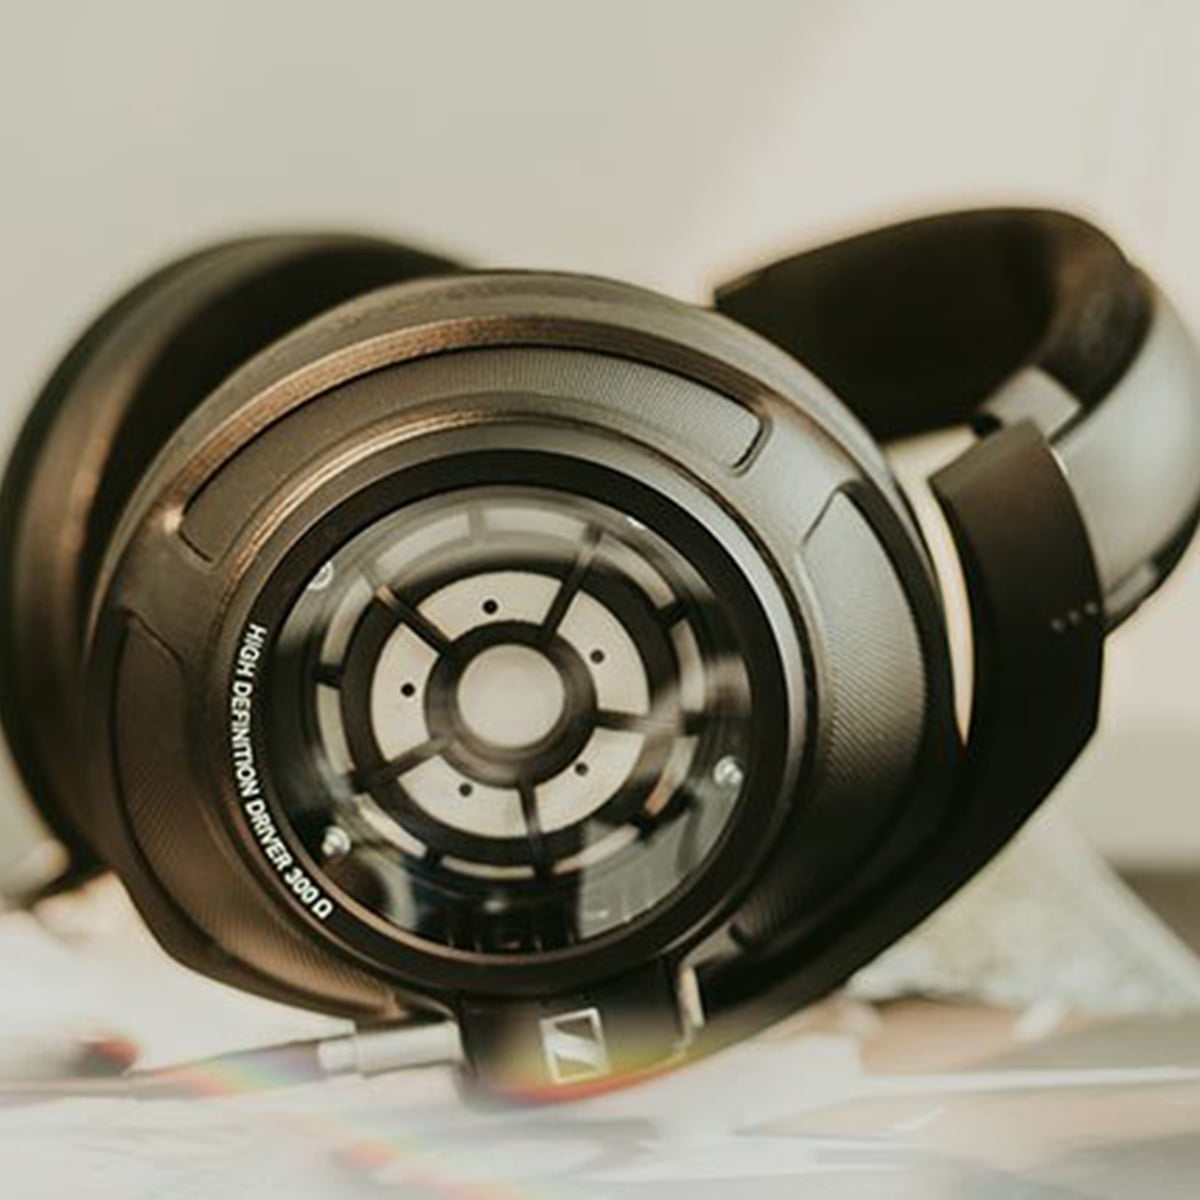 Sennheiser HD 820 Over-Ear Closed-Back Headphones (Black